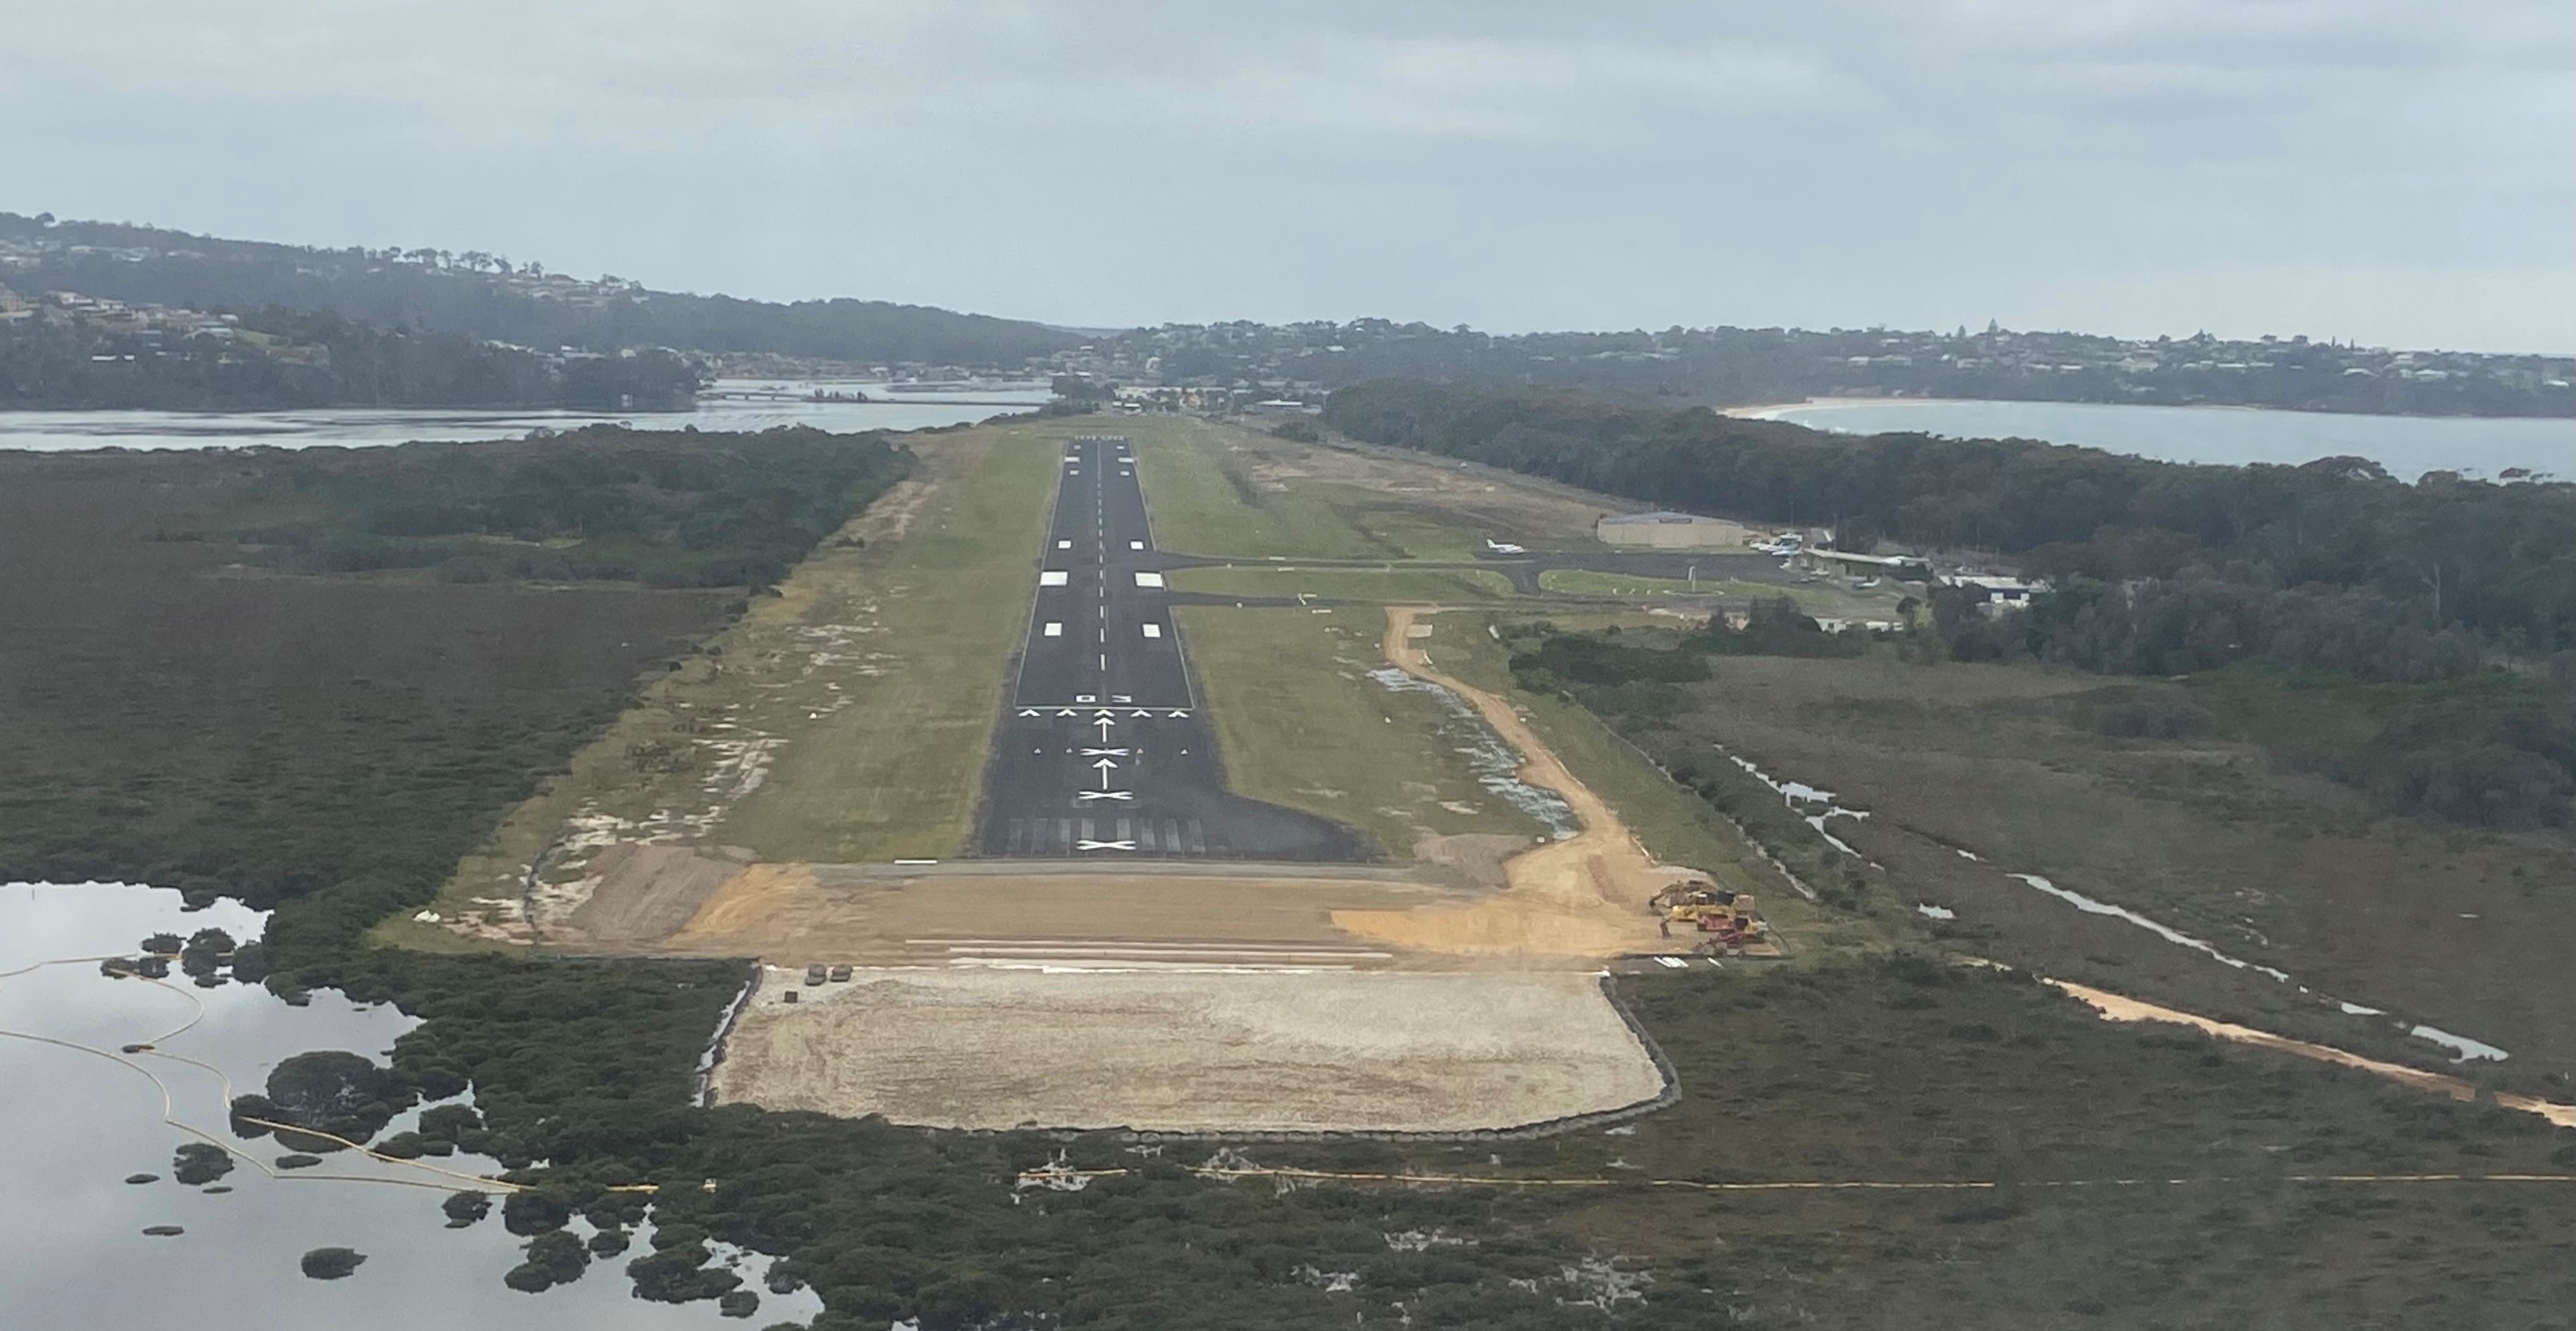 Merimbula Airport closes for six weeks for runway upgrade